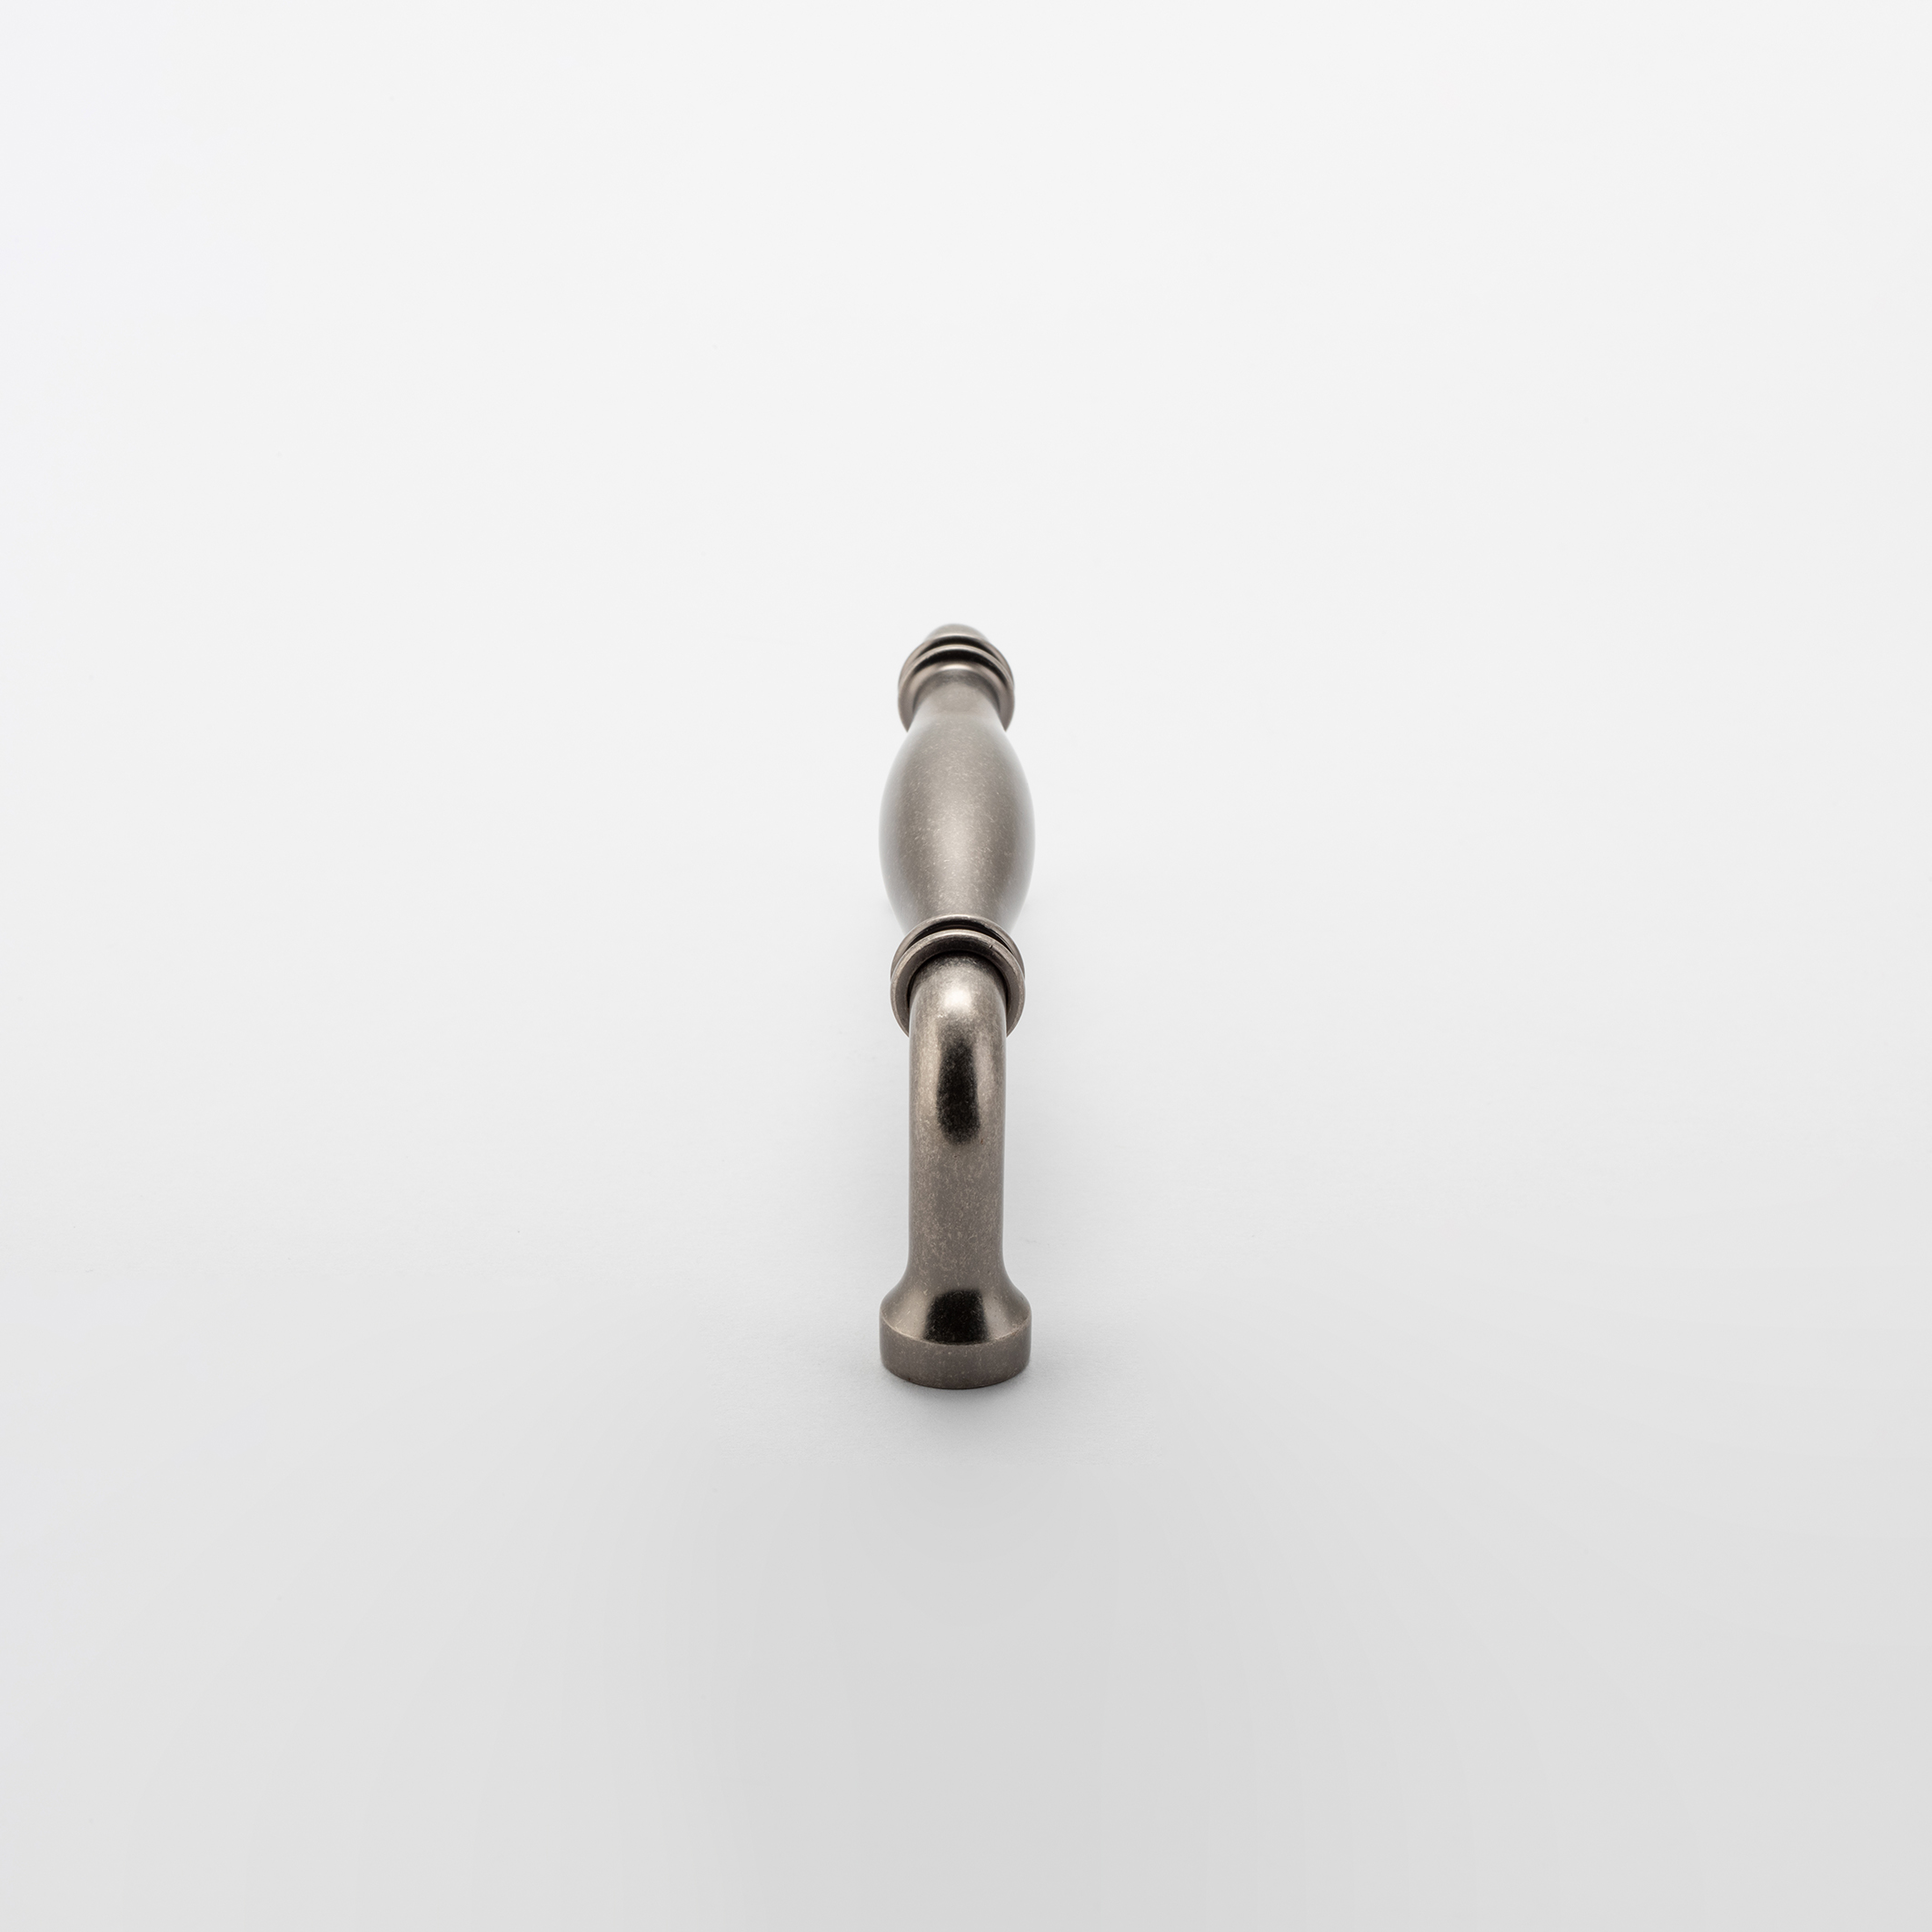 21067 - Sarlat Cabinet Pull - CTC128mm - Distressed Nickel